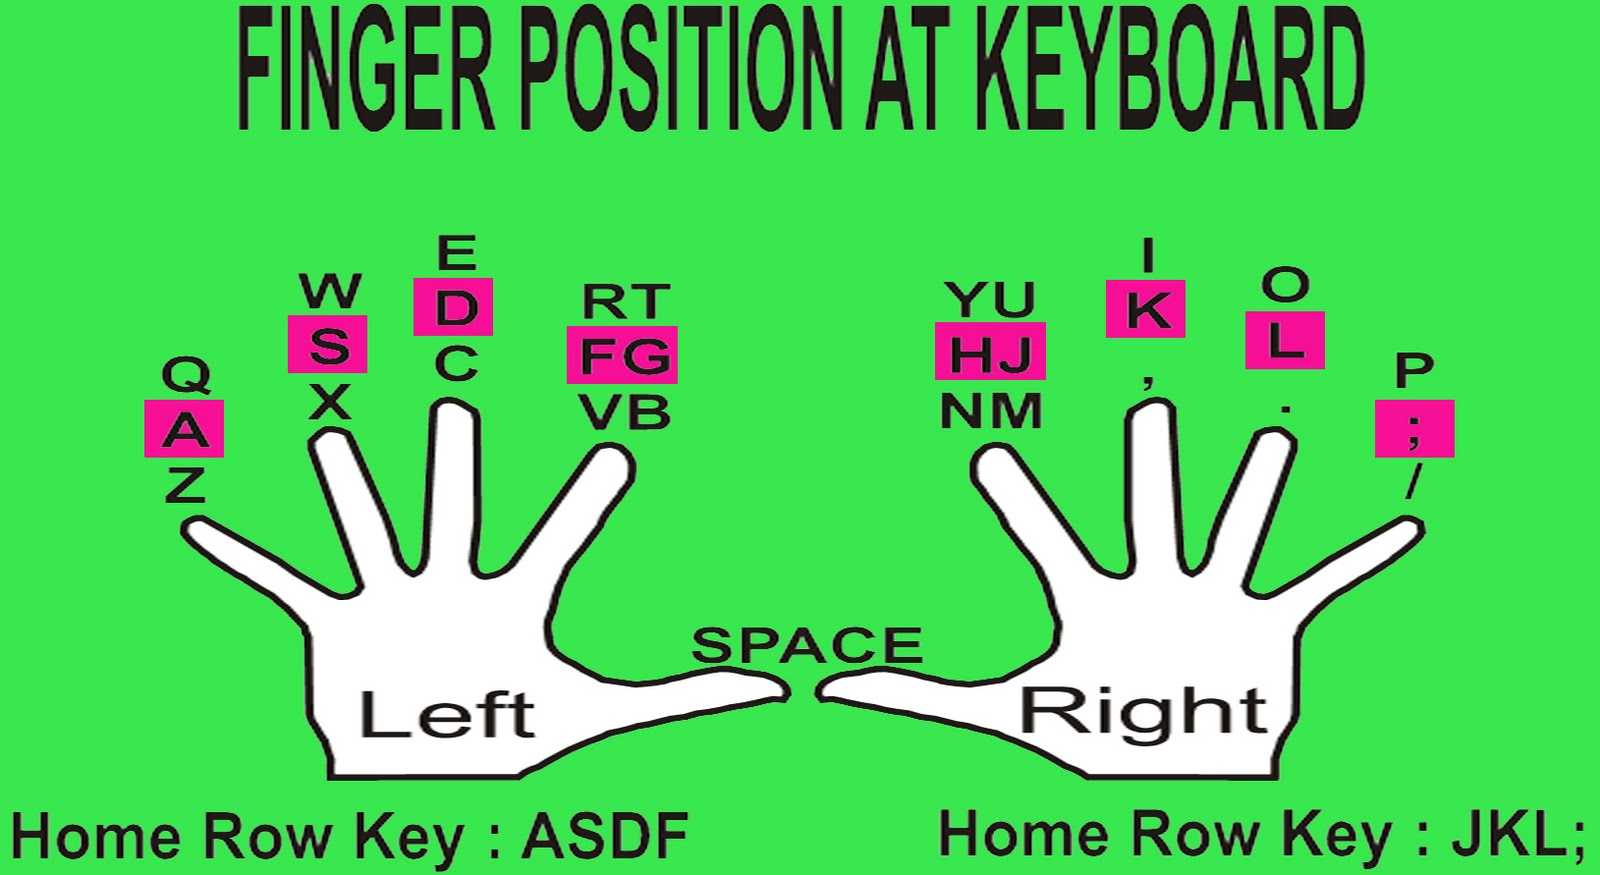 test hand position proper typing at keyboard position Finger